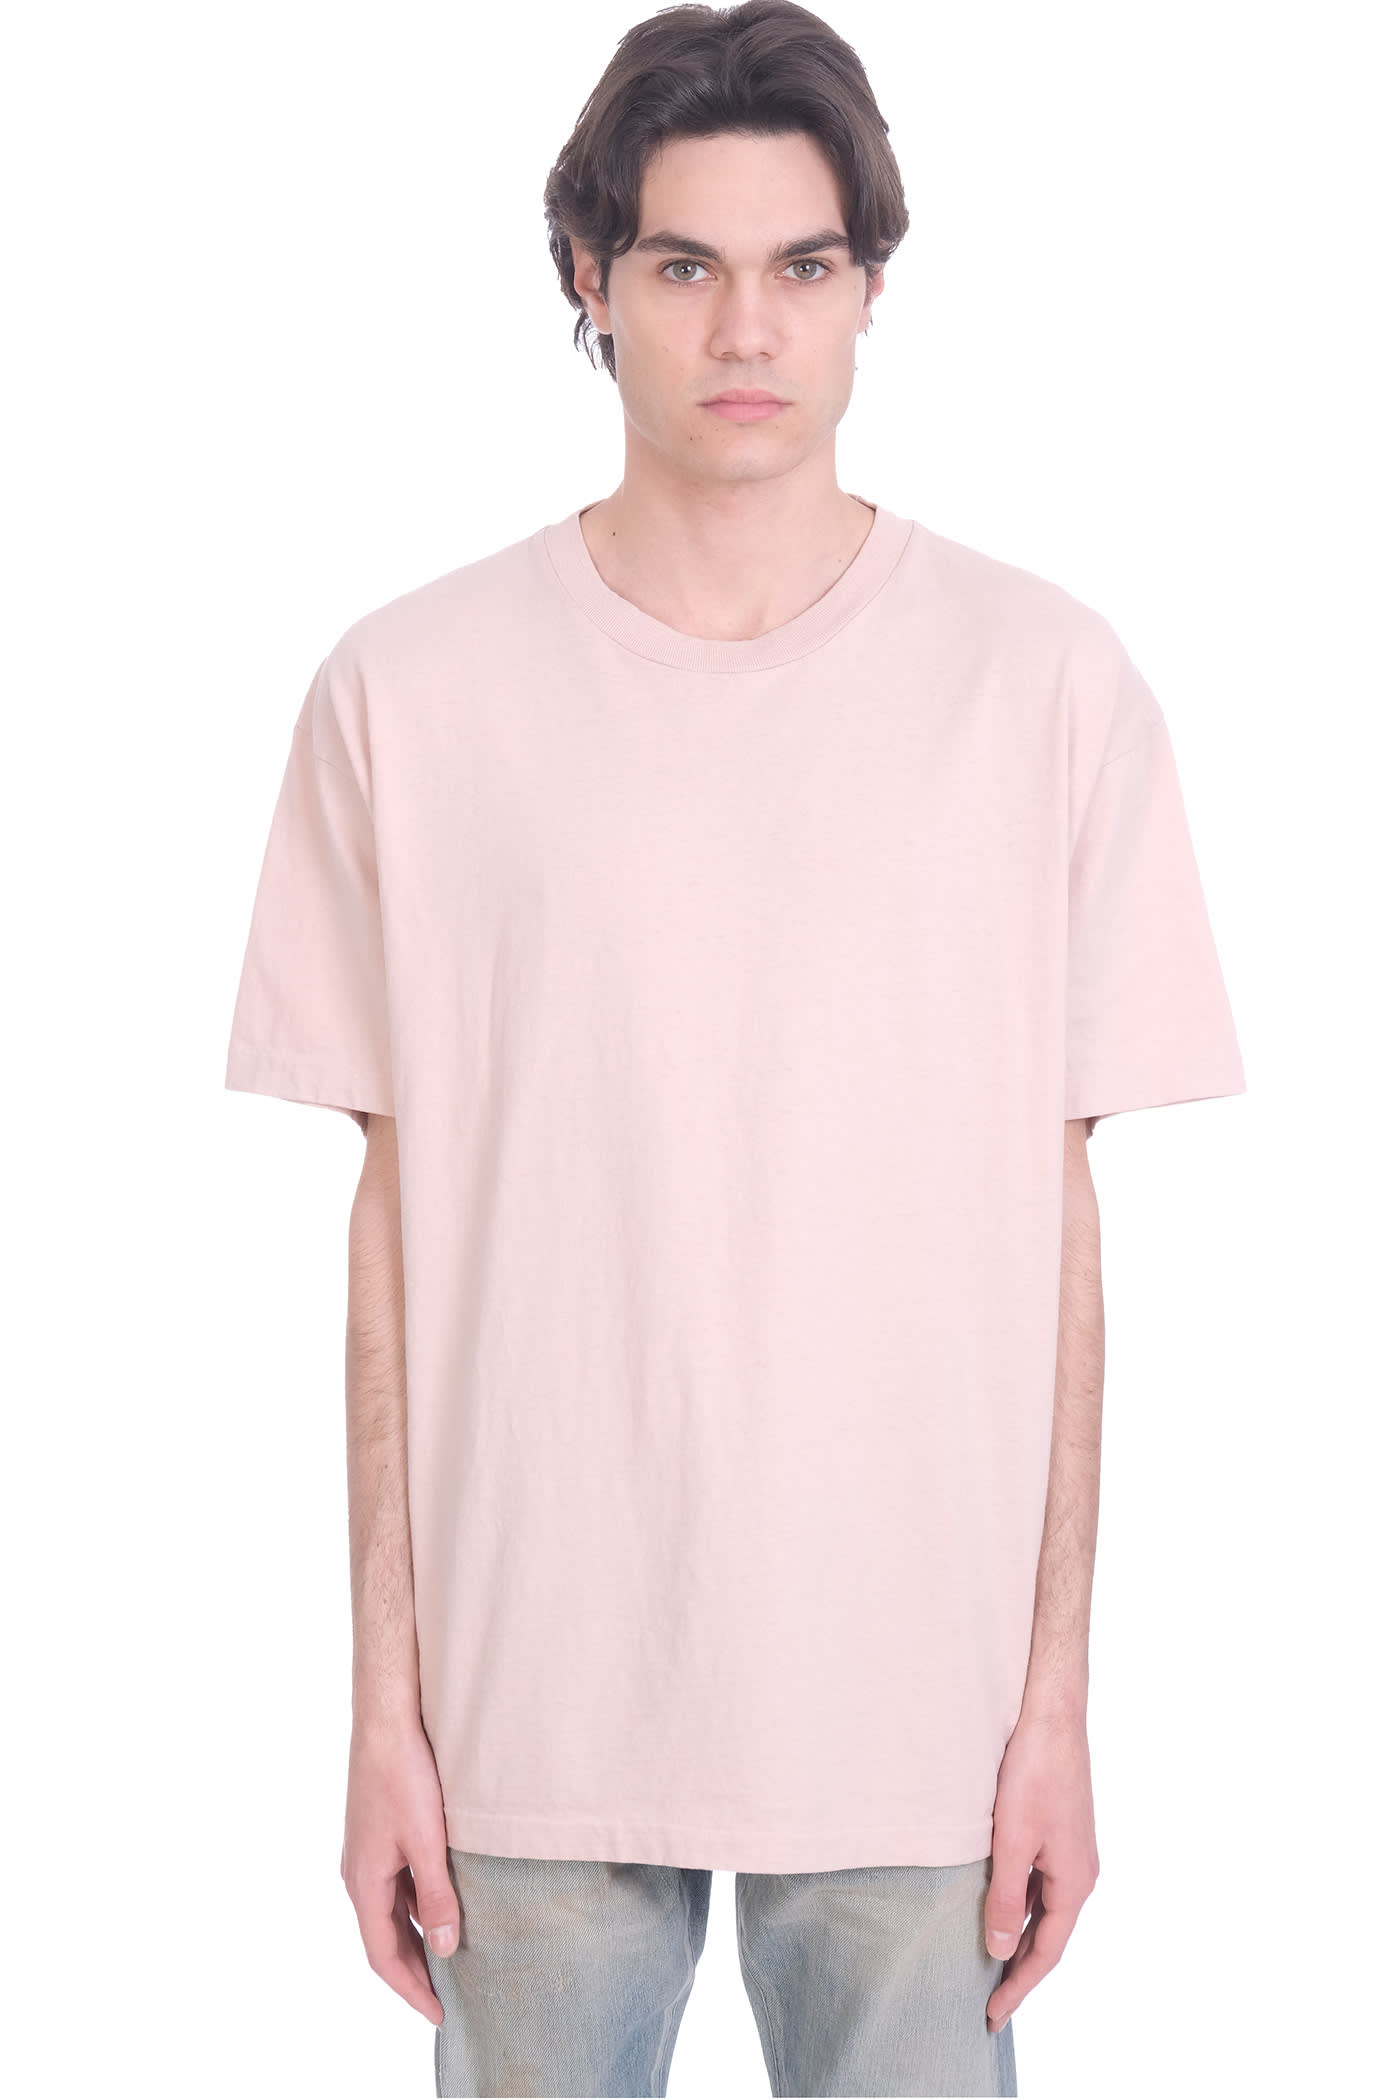 John Elliott T-shirt In Rose-pink Cotton